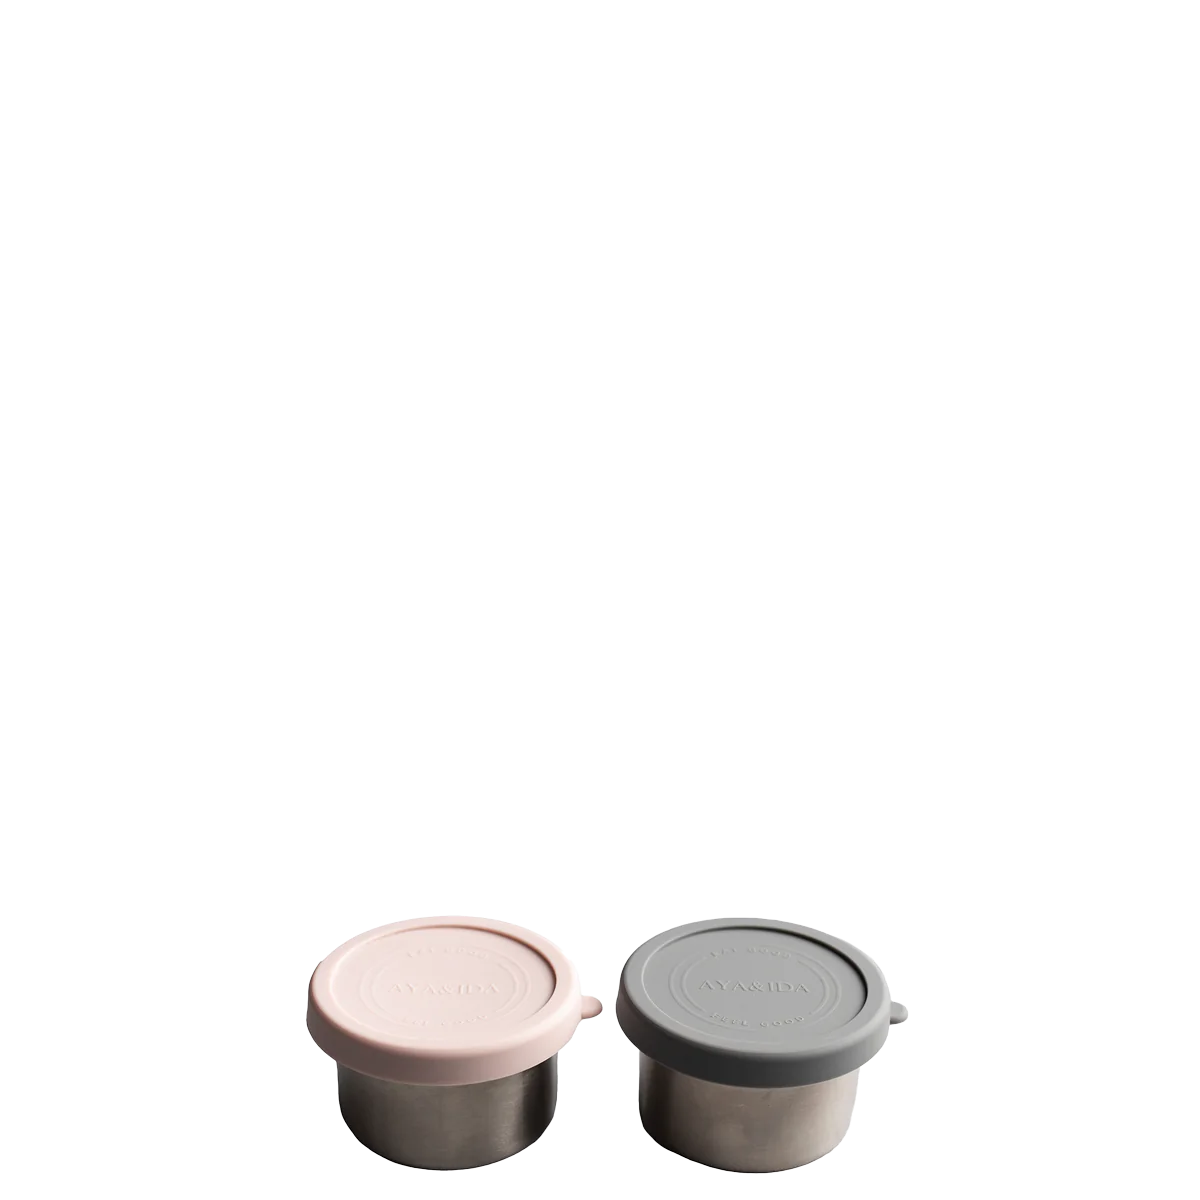 Aya & Ida Dark Grey/ Soft Rose snack containers